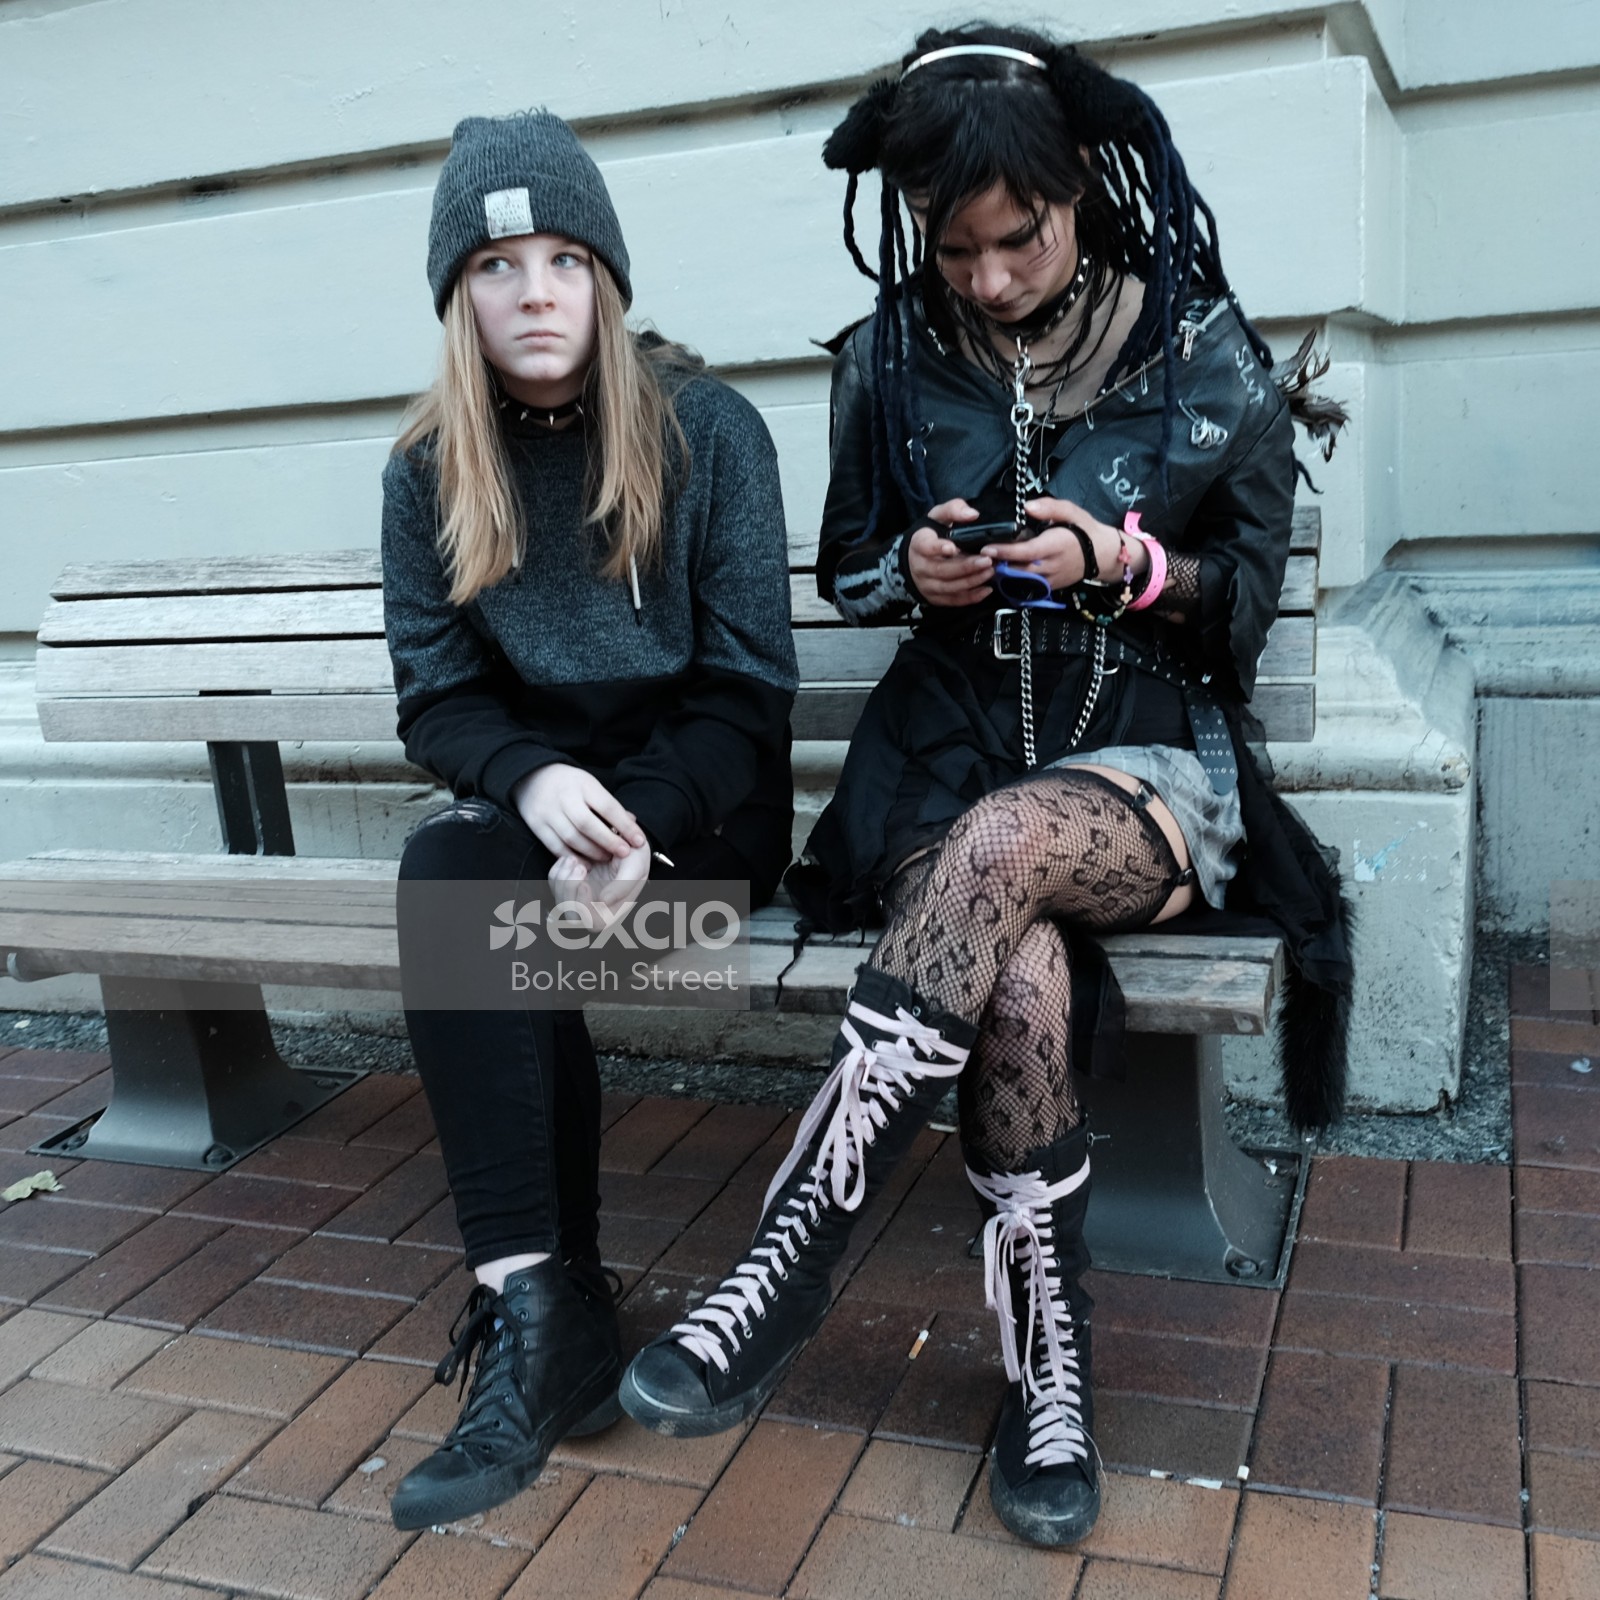 Two women on a bench in Wellington